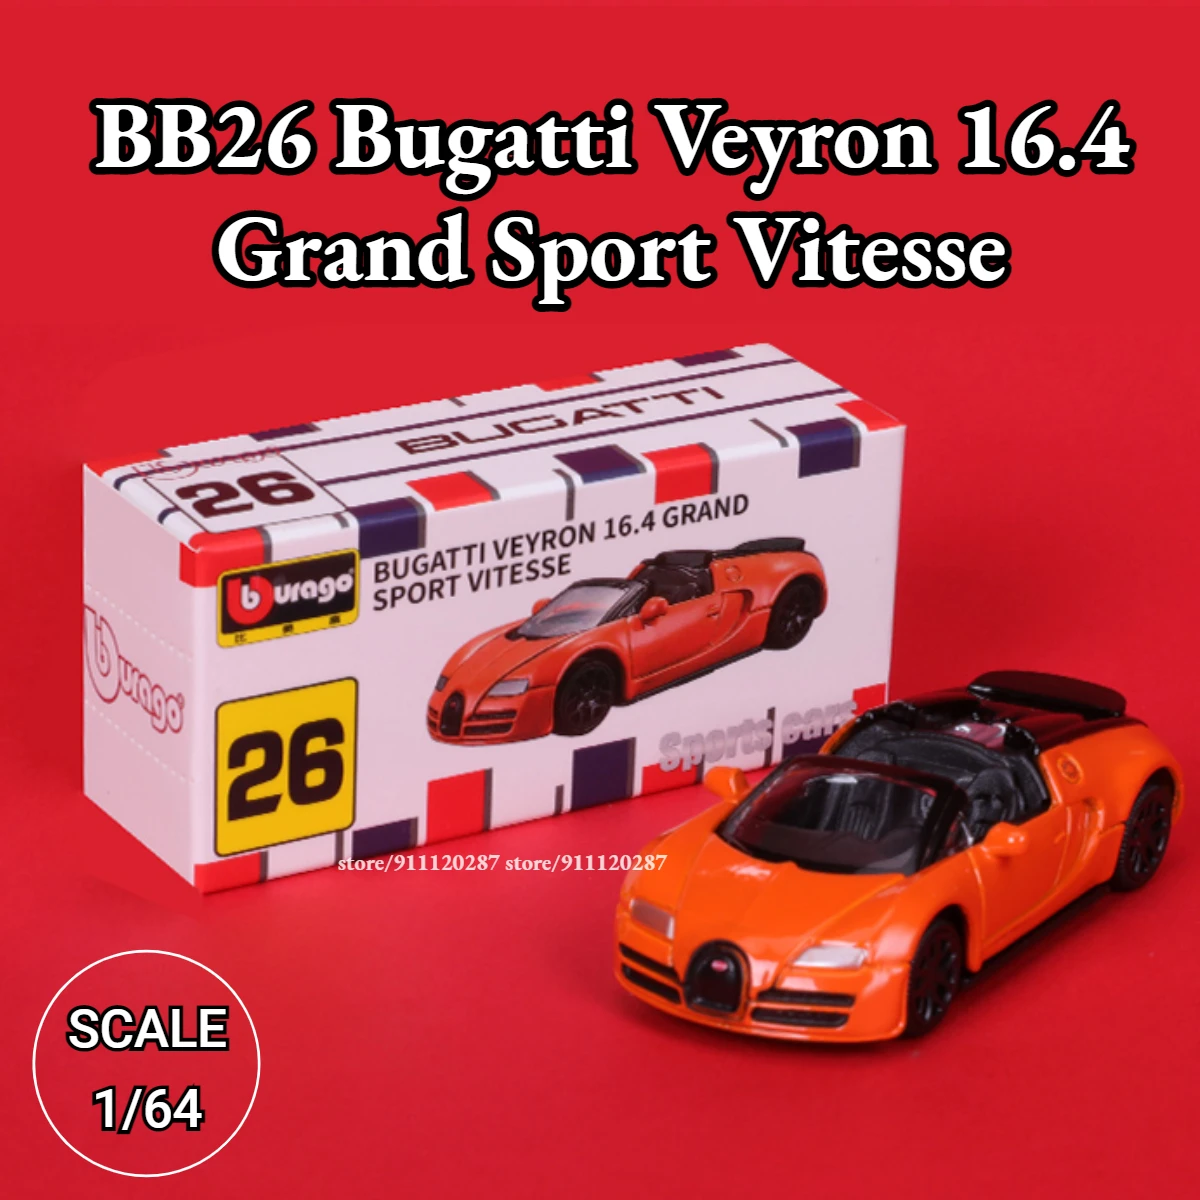 

Bburago 1/64 Mini Car Model, BB26 Bugatti Veyron 16.4 Grand Sport Vitesse Scale Miniature Art Diecast Vehicle Replica Toy